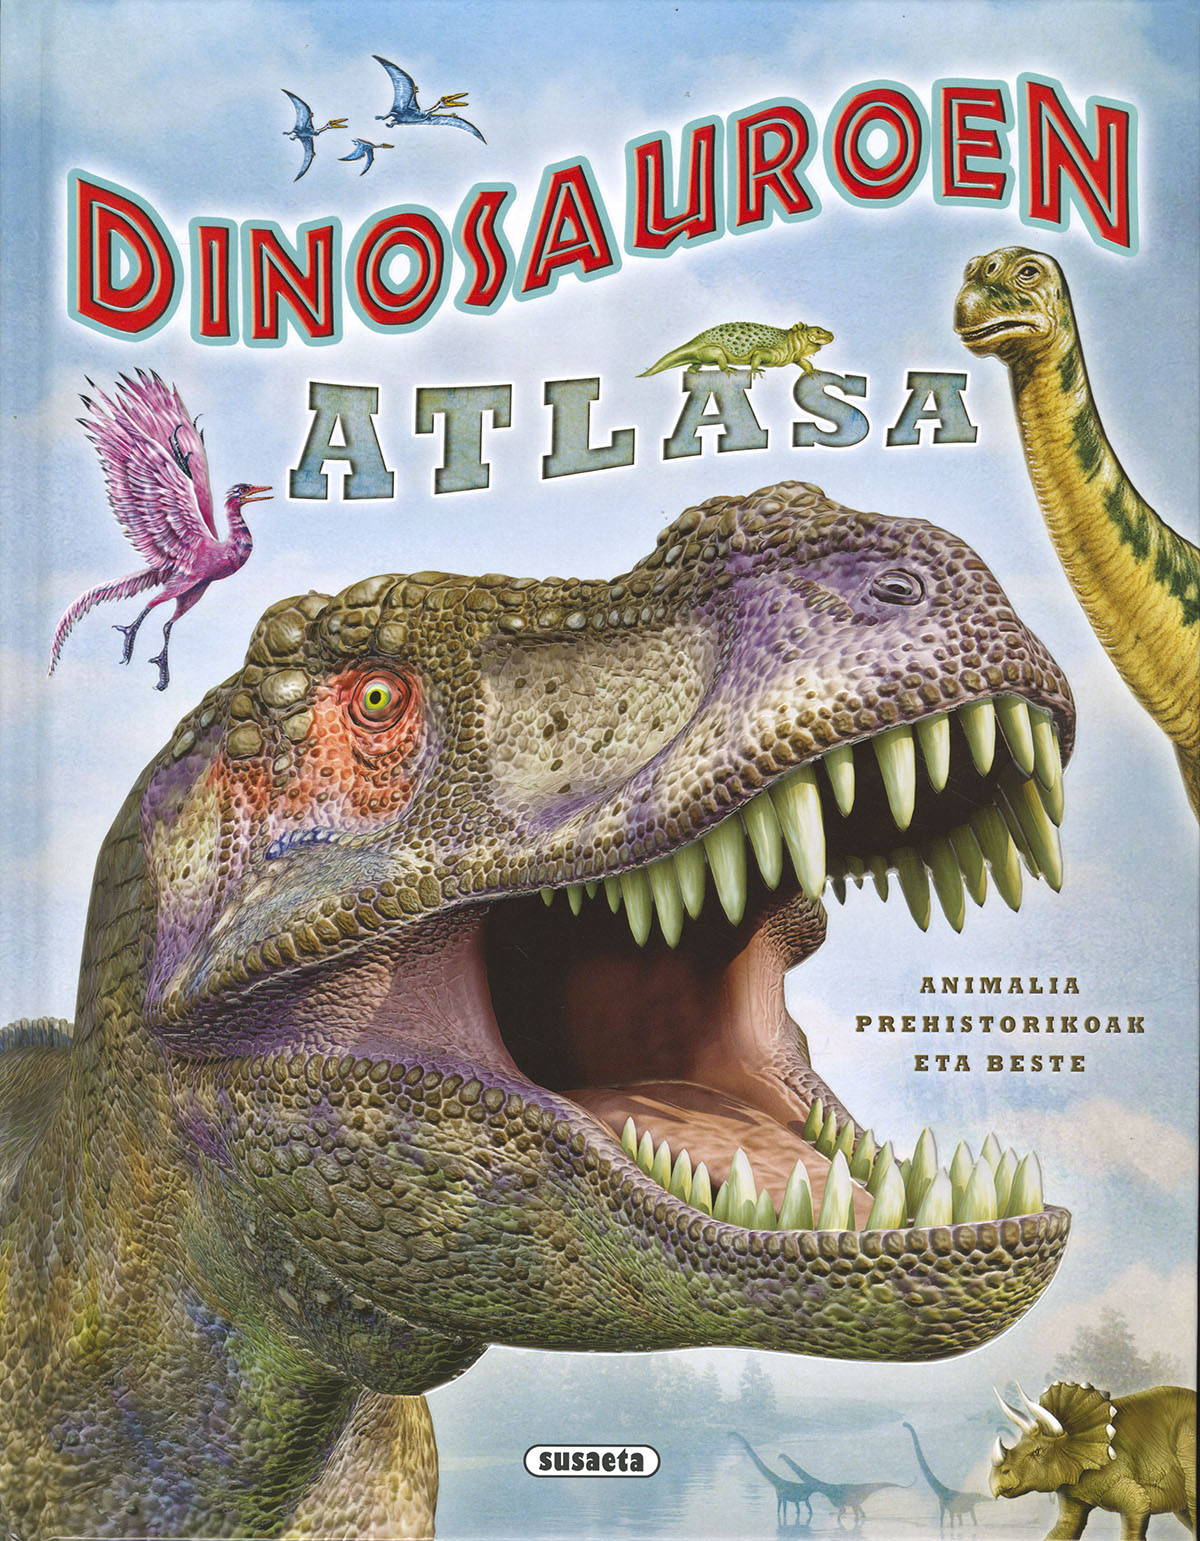 Dinosauroen atlasa